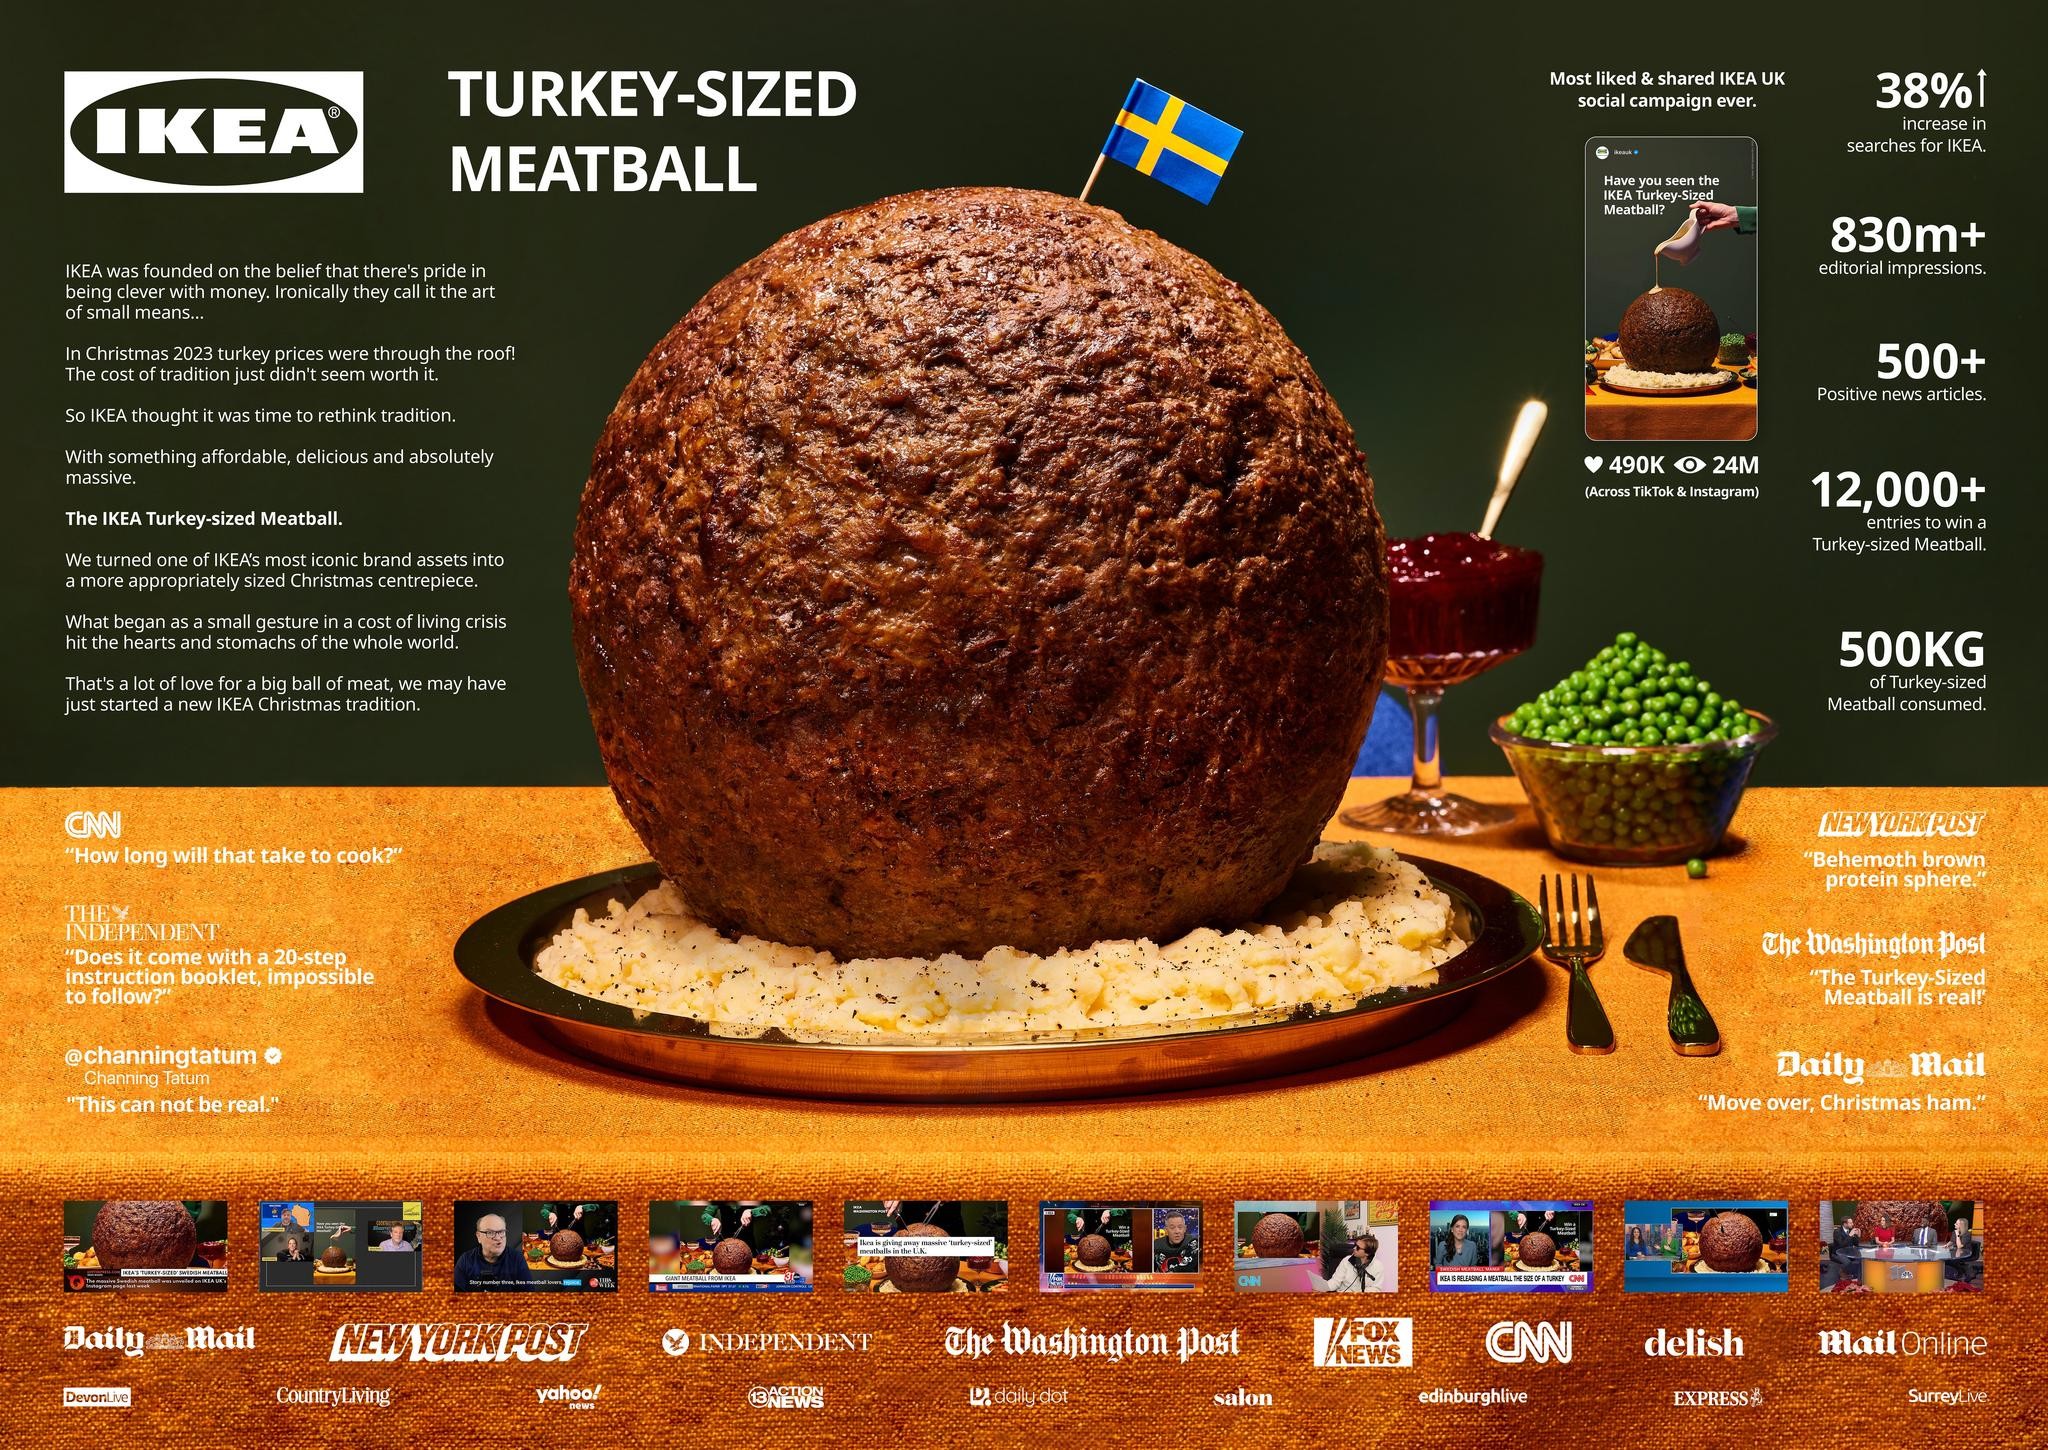 IKEA 'Turkey-Sized Meatball'